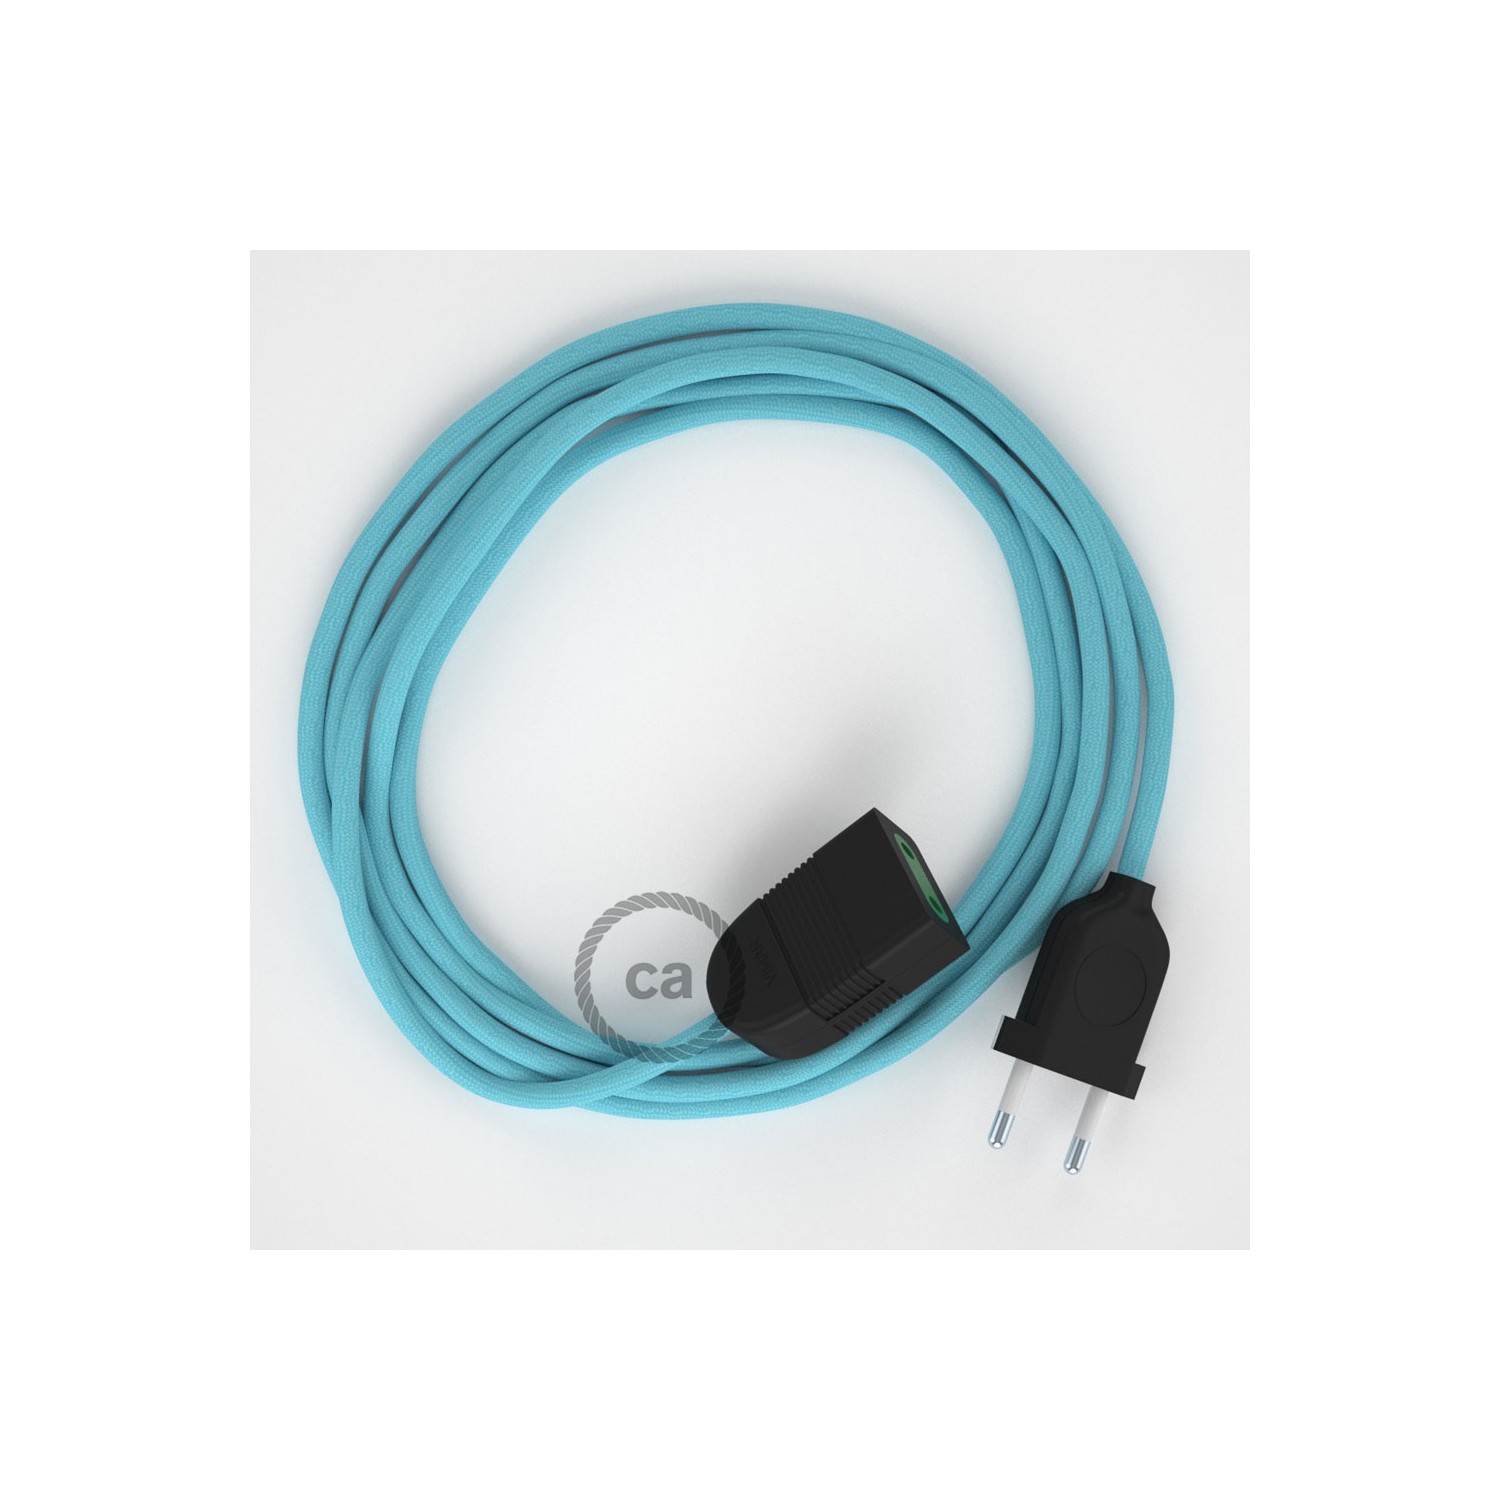 Rallonge électrique avec câble textile RM17 Effet Soie Bleu Clair Baby 2P 10A Made in Italy.